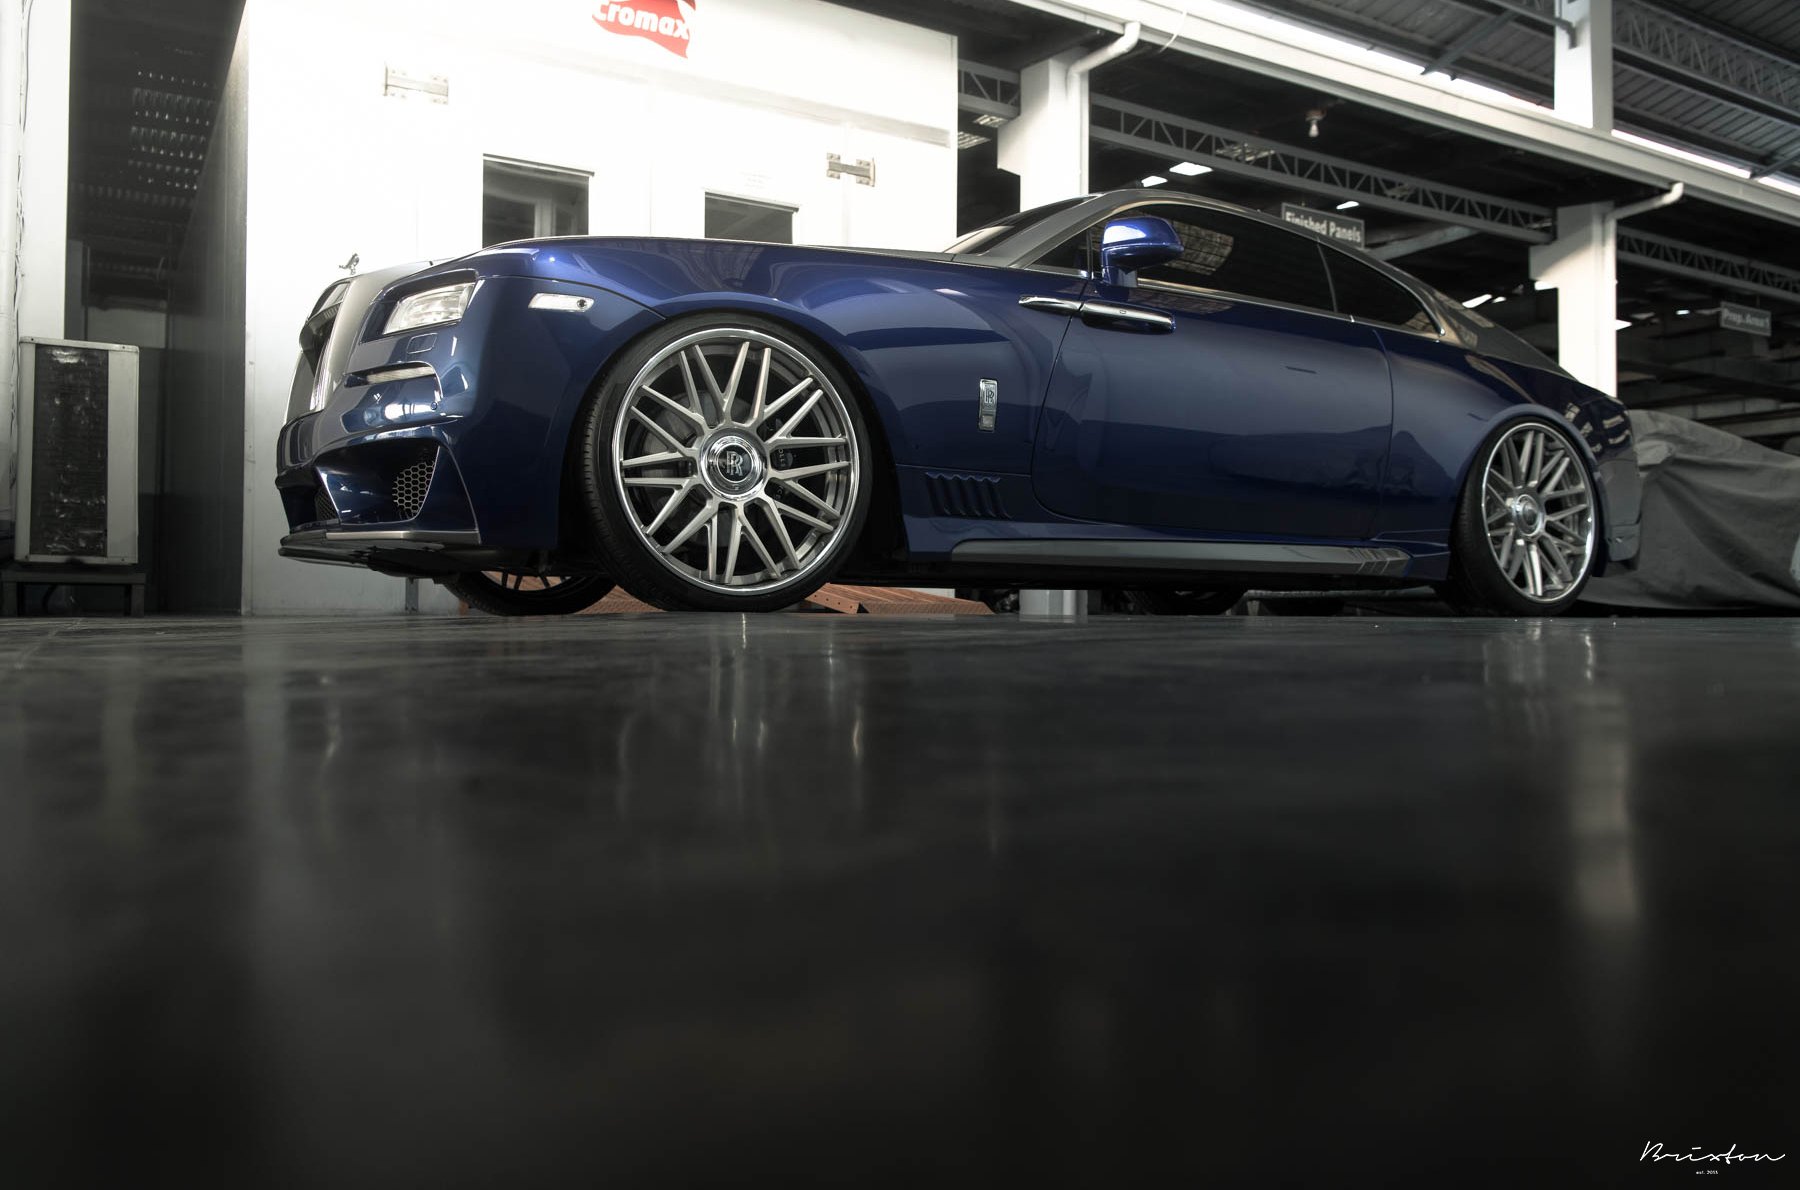 Brixtom Forged Wheels on Blue Rolls Royce Wraith - Photo by Brixton Forged Wheels